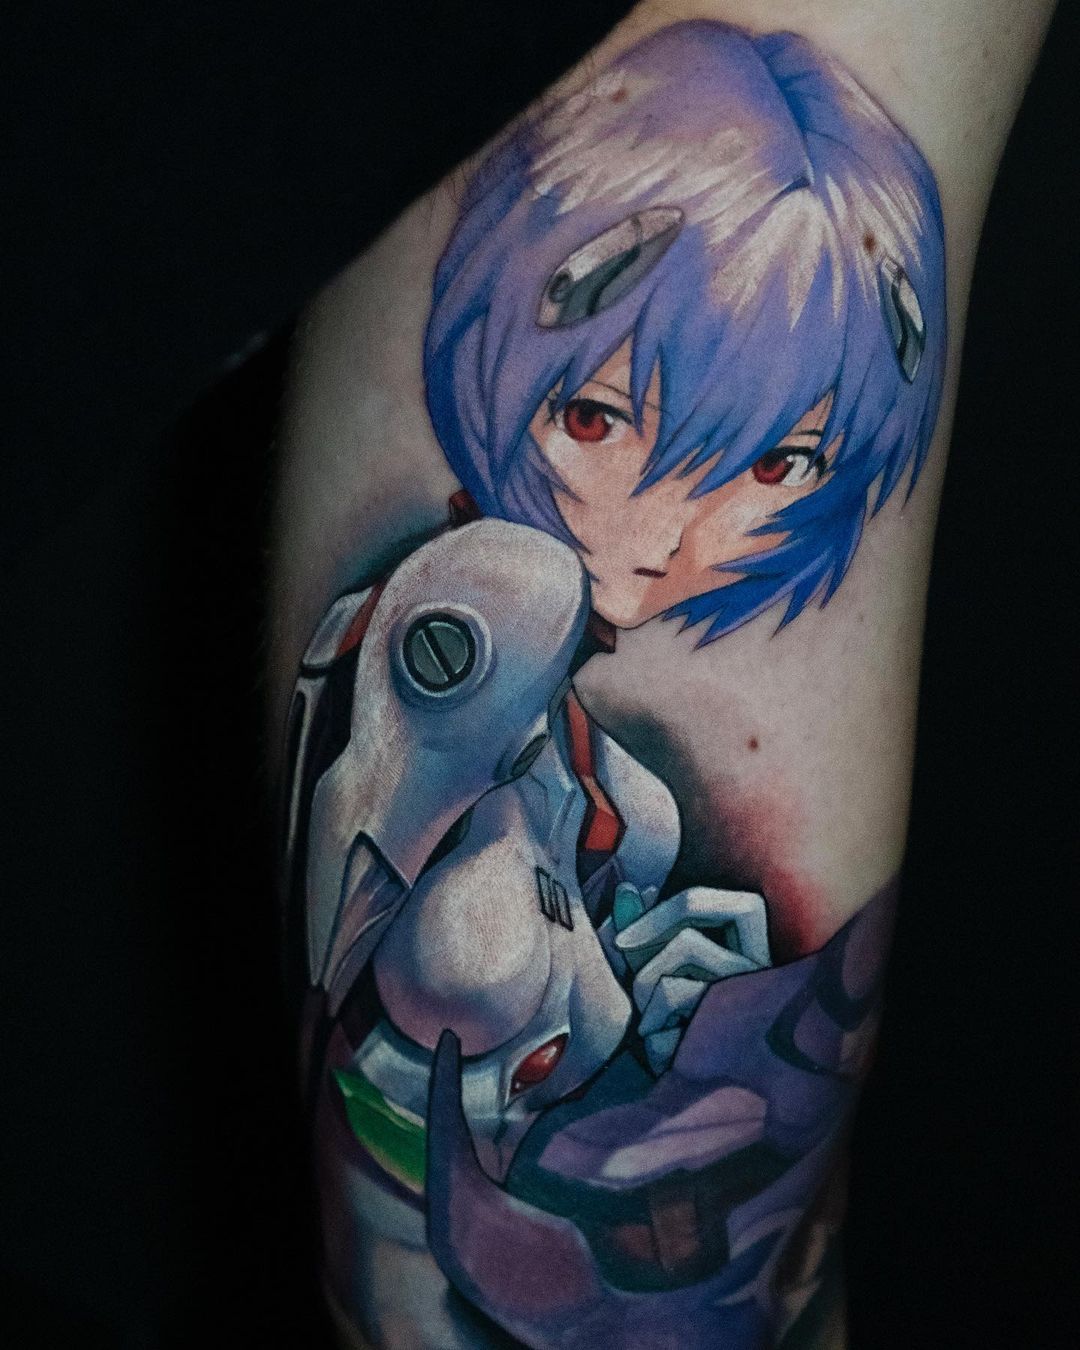 Rei ayanami tattoo by paulamayotattoo on DeviantArt